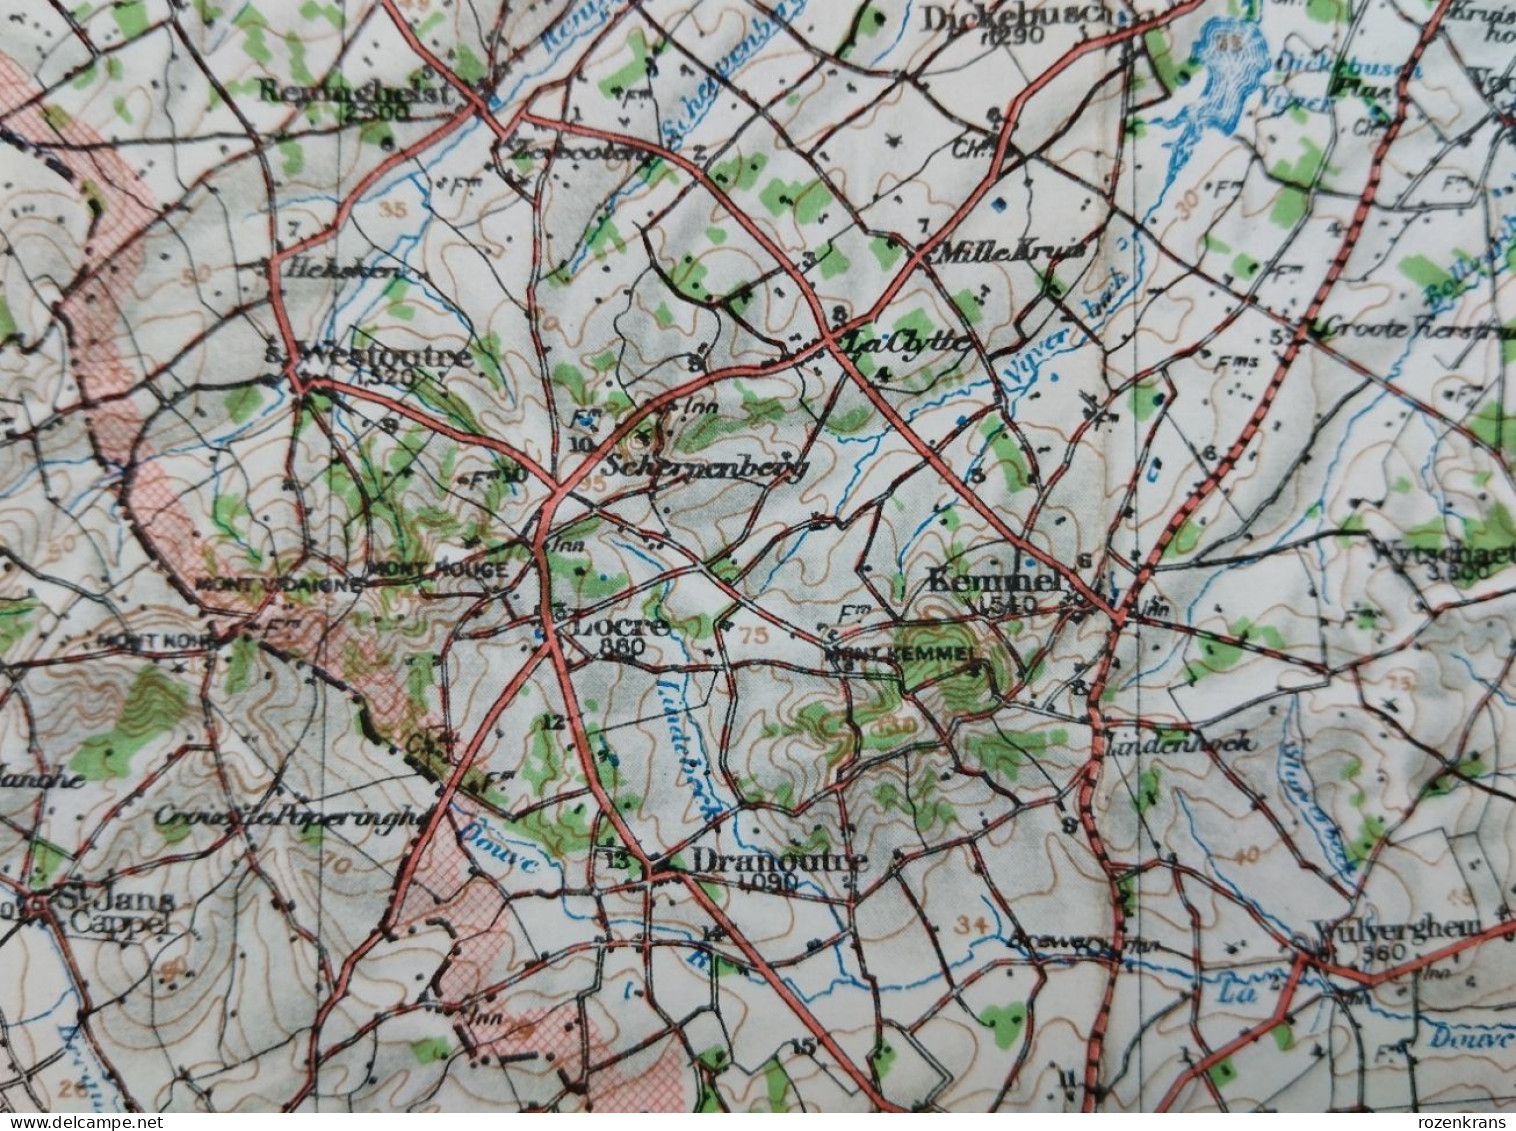 Carte Topographique Militaire UK War Office 1917 World War 1 WW1 Hazebrouck Ieper Poperinge Armentieres Cassel Kemmel - Topographical Maps